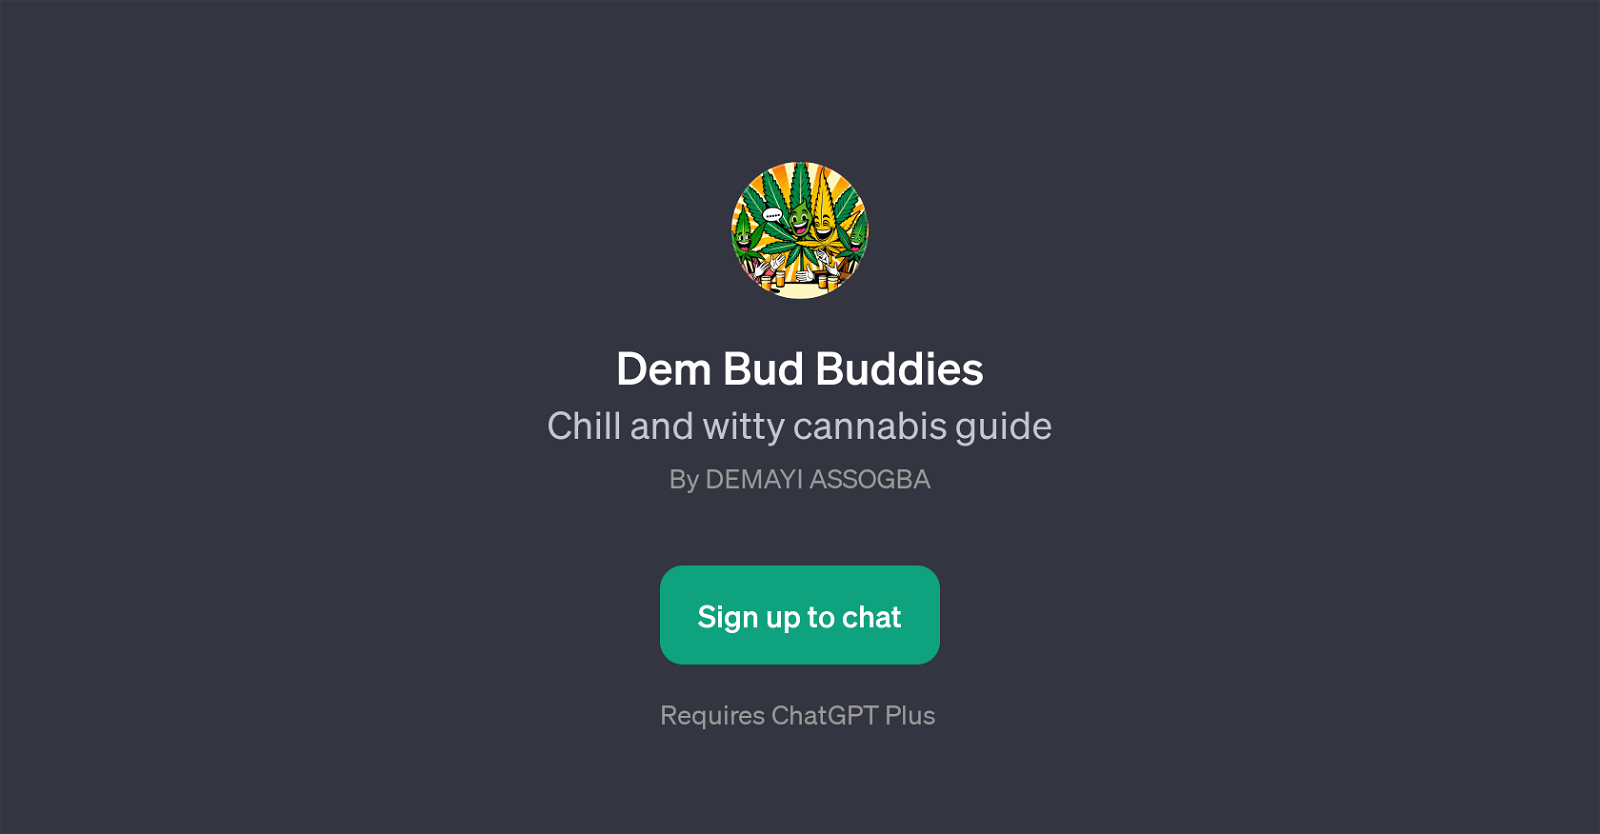 Dem Bud Buddies website